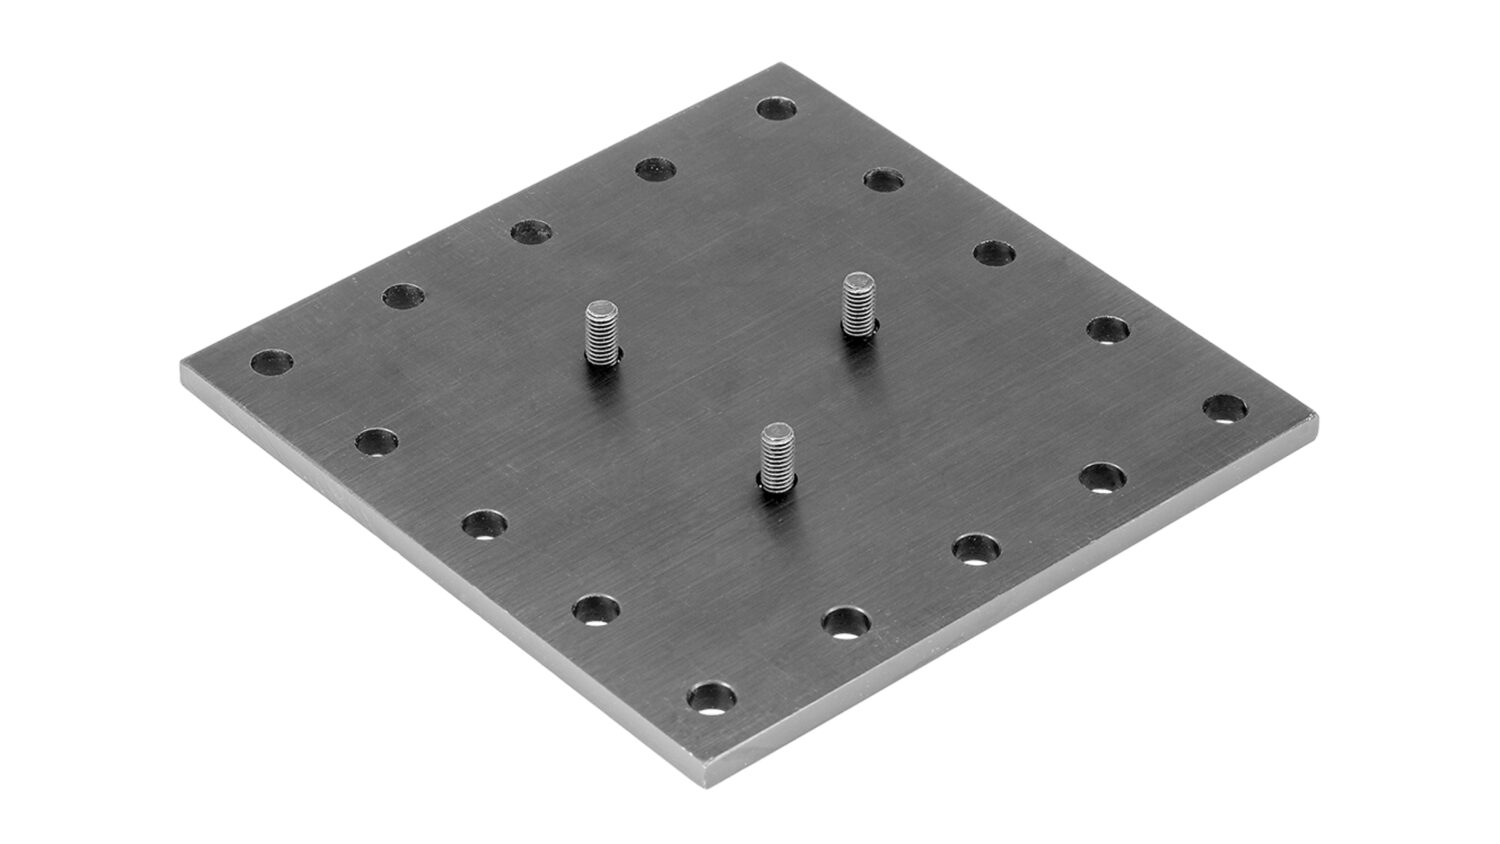 FOBA perforated plate for metrology (Messtechnik)